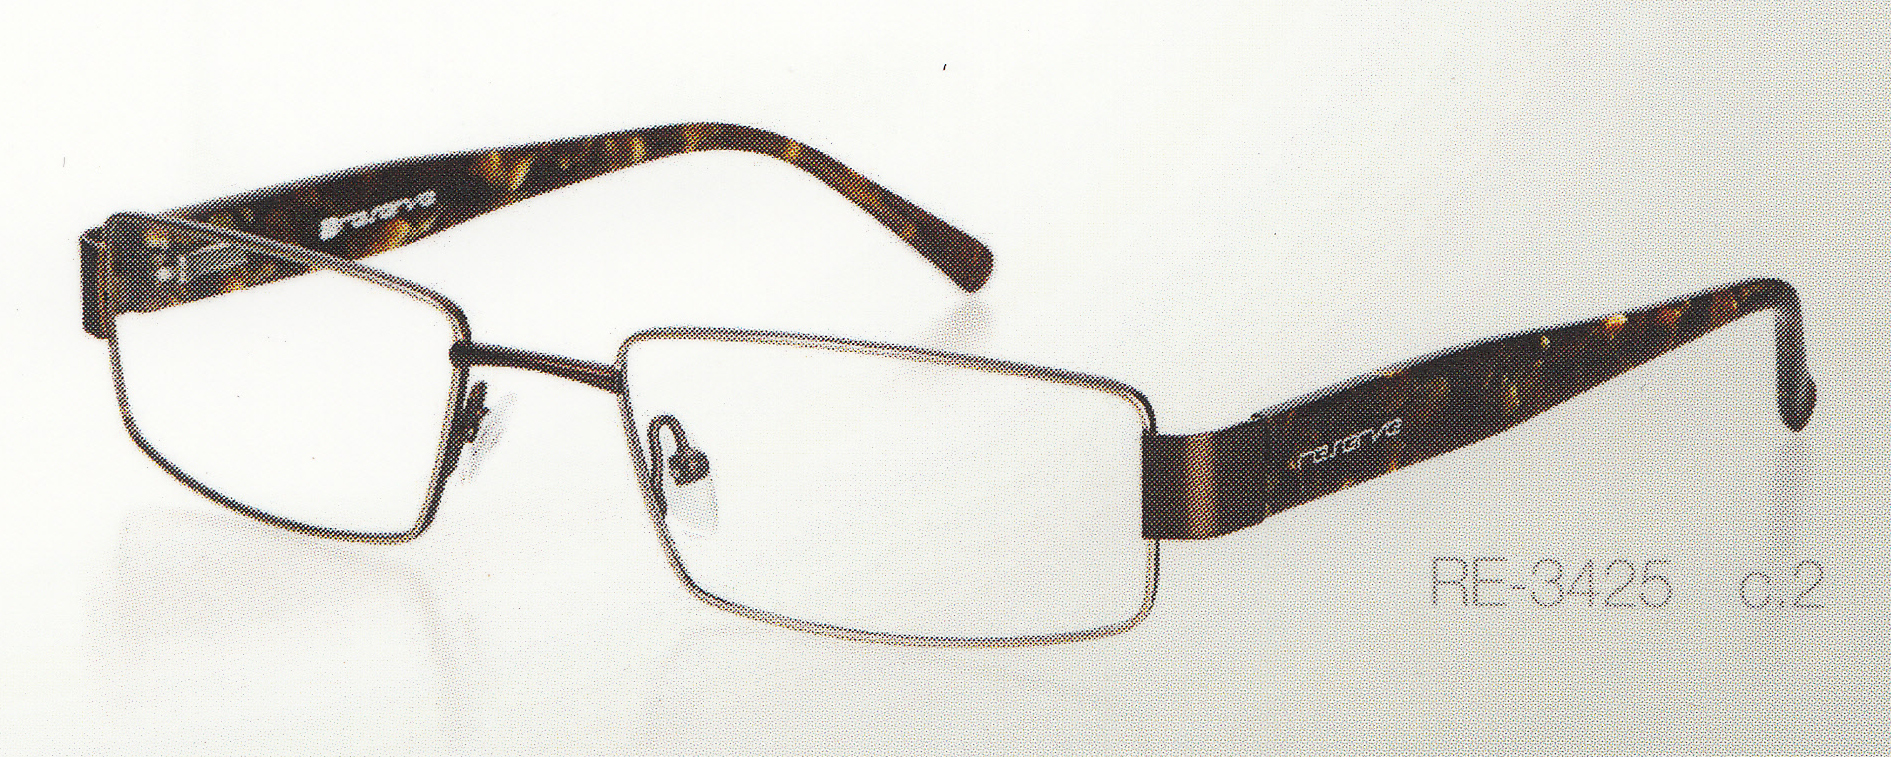 Dioptrické okuliare Reserve 3425 č.2